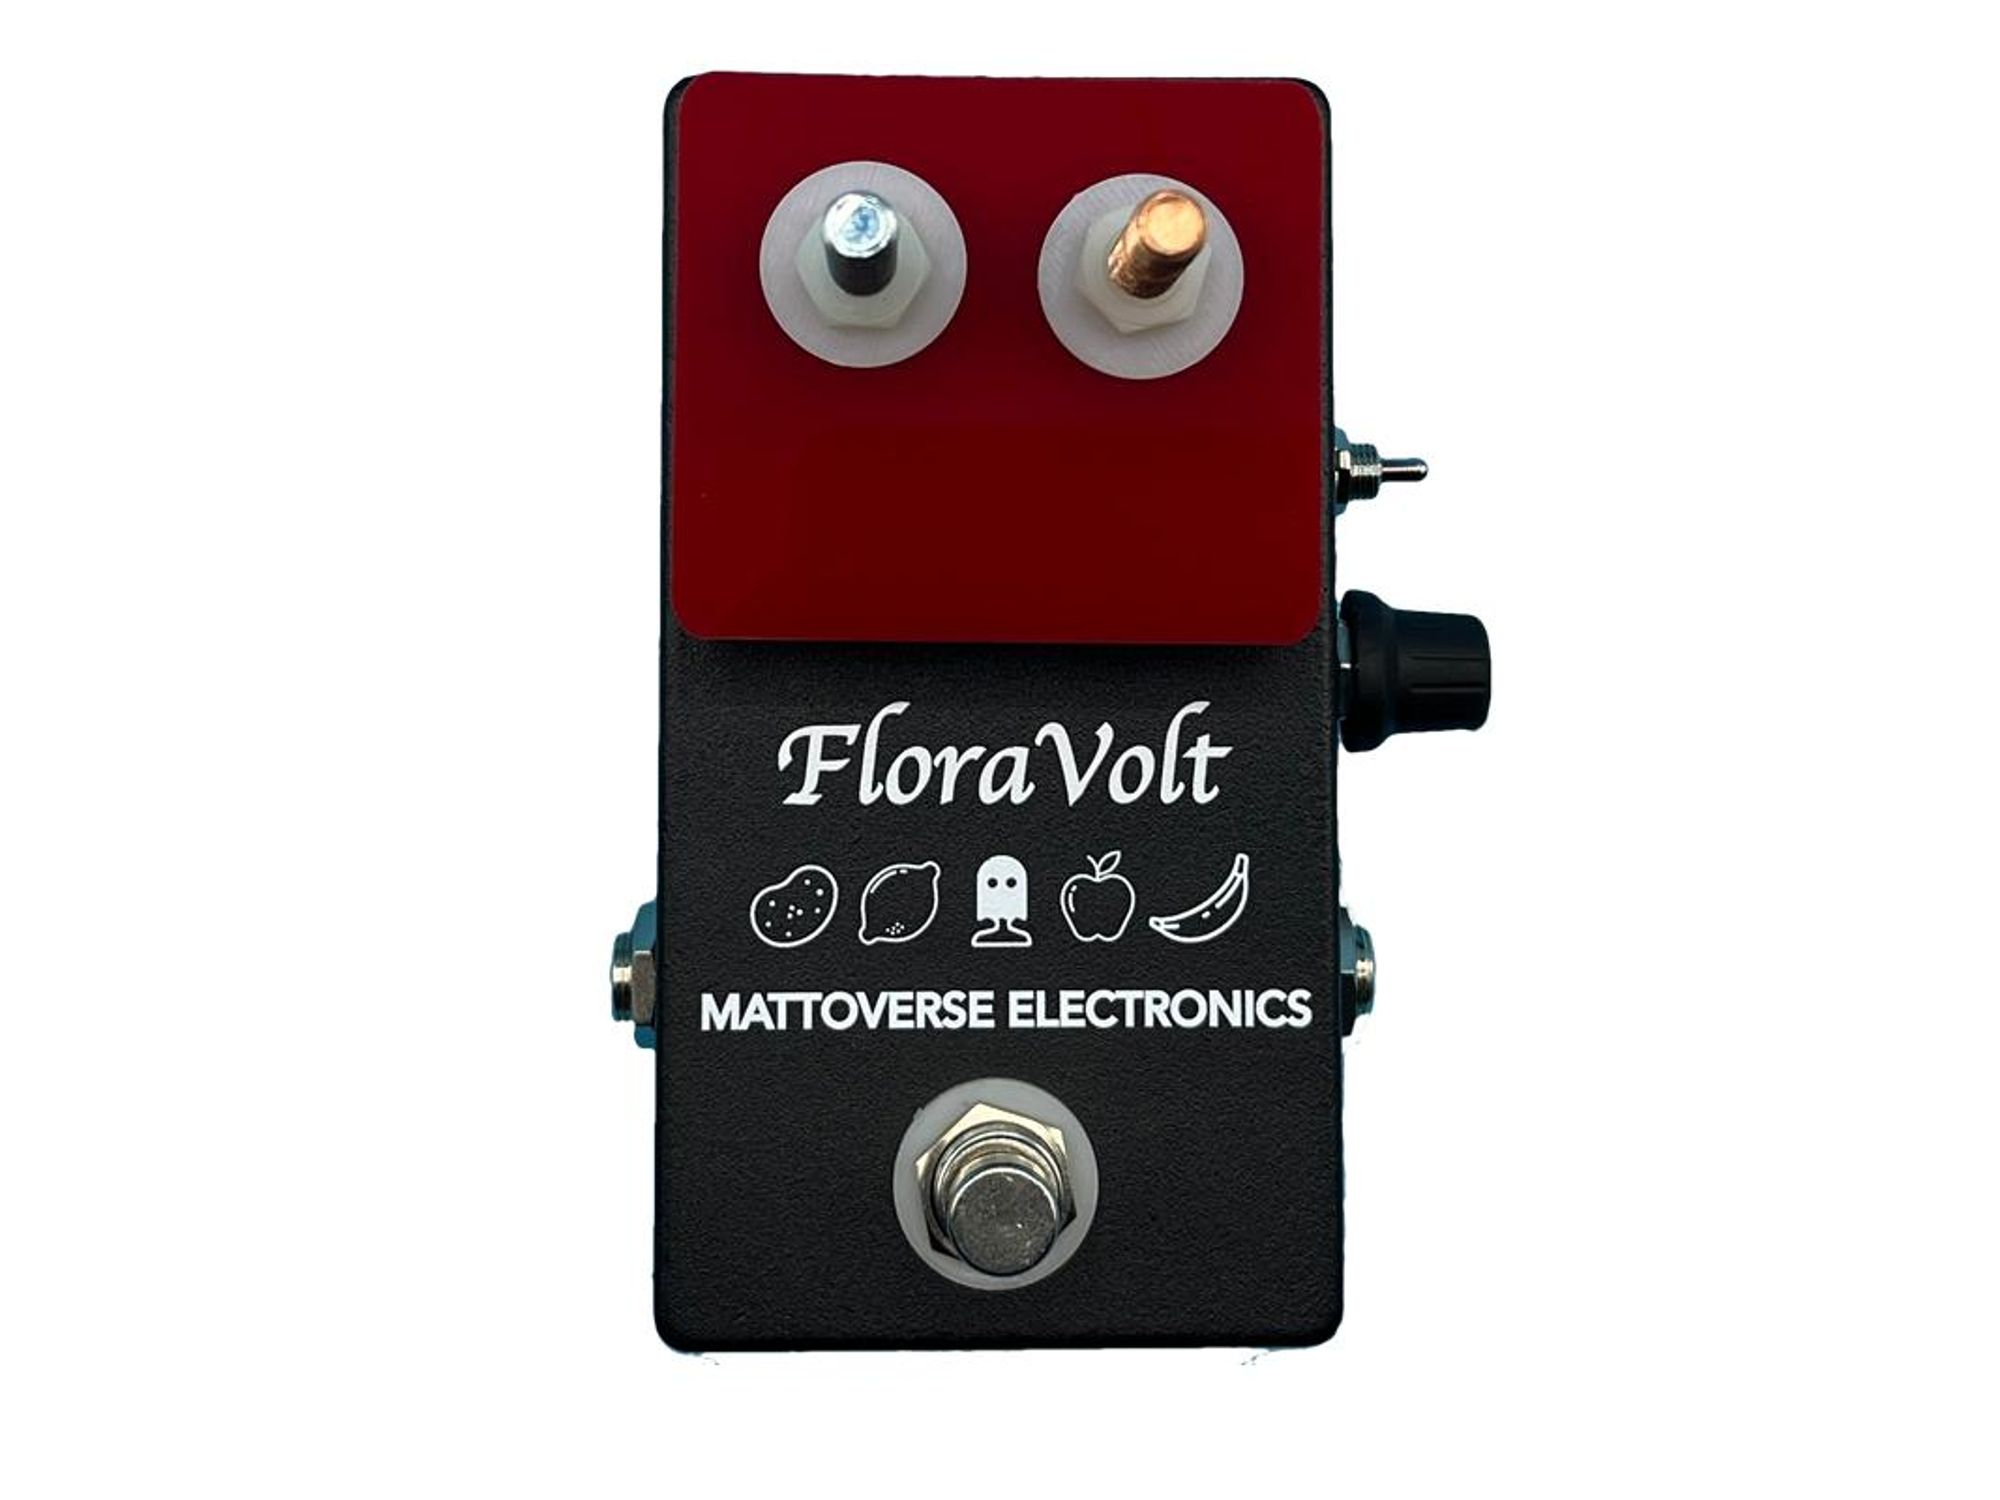 Mattoverse Electronics Releases the FloraVolt